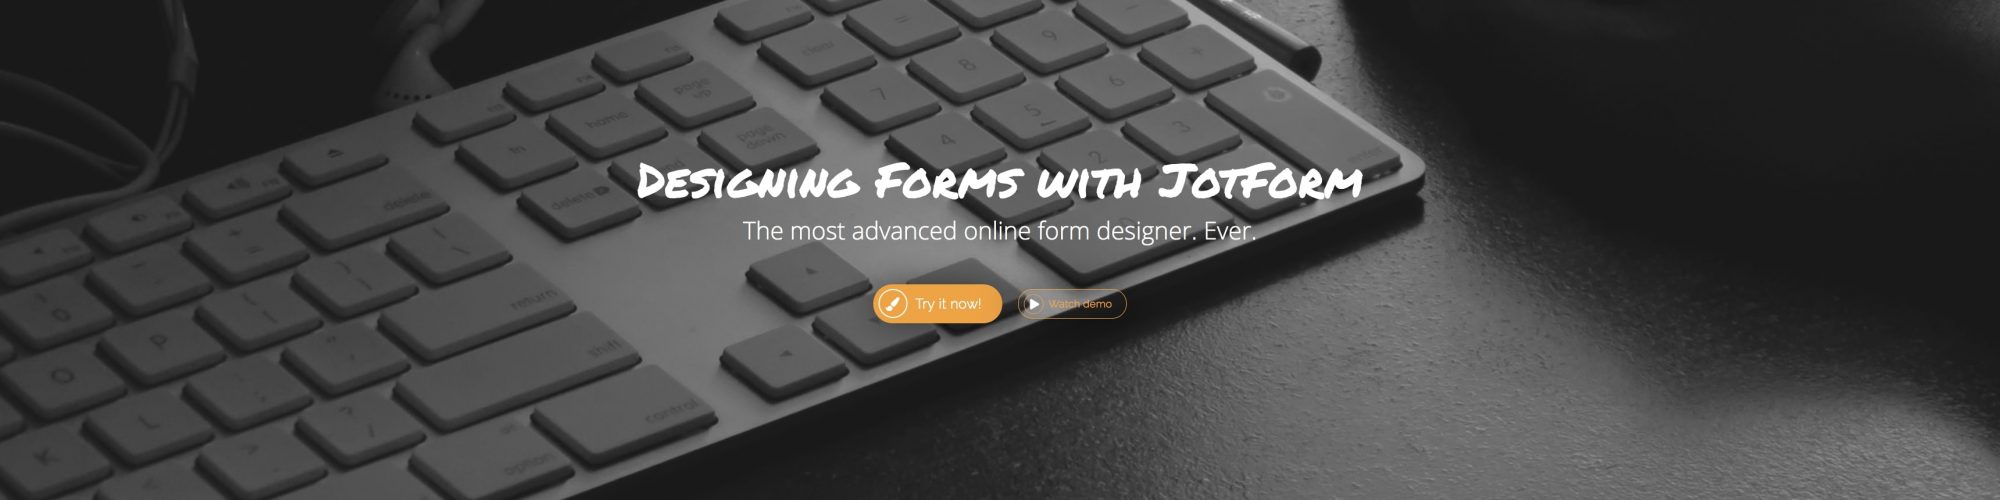 Introducing Jotform’s New Form Designer!